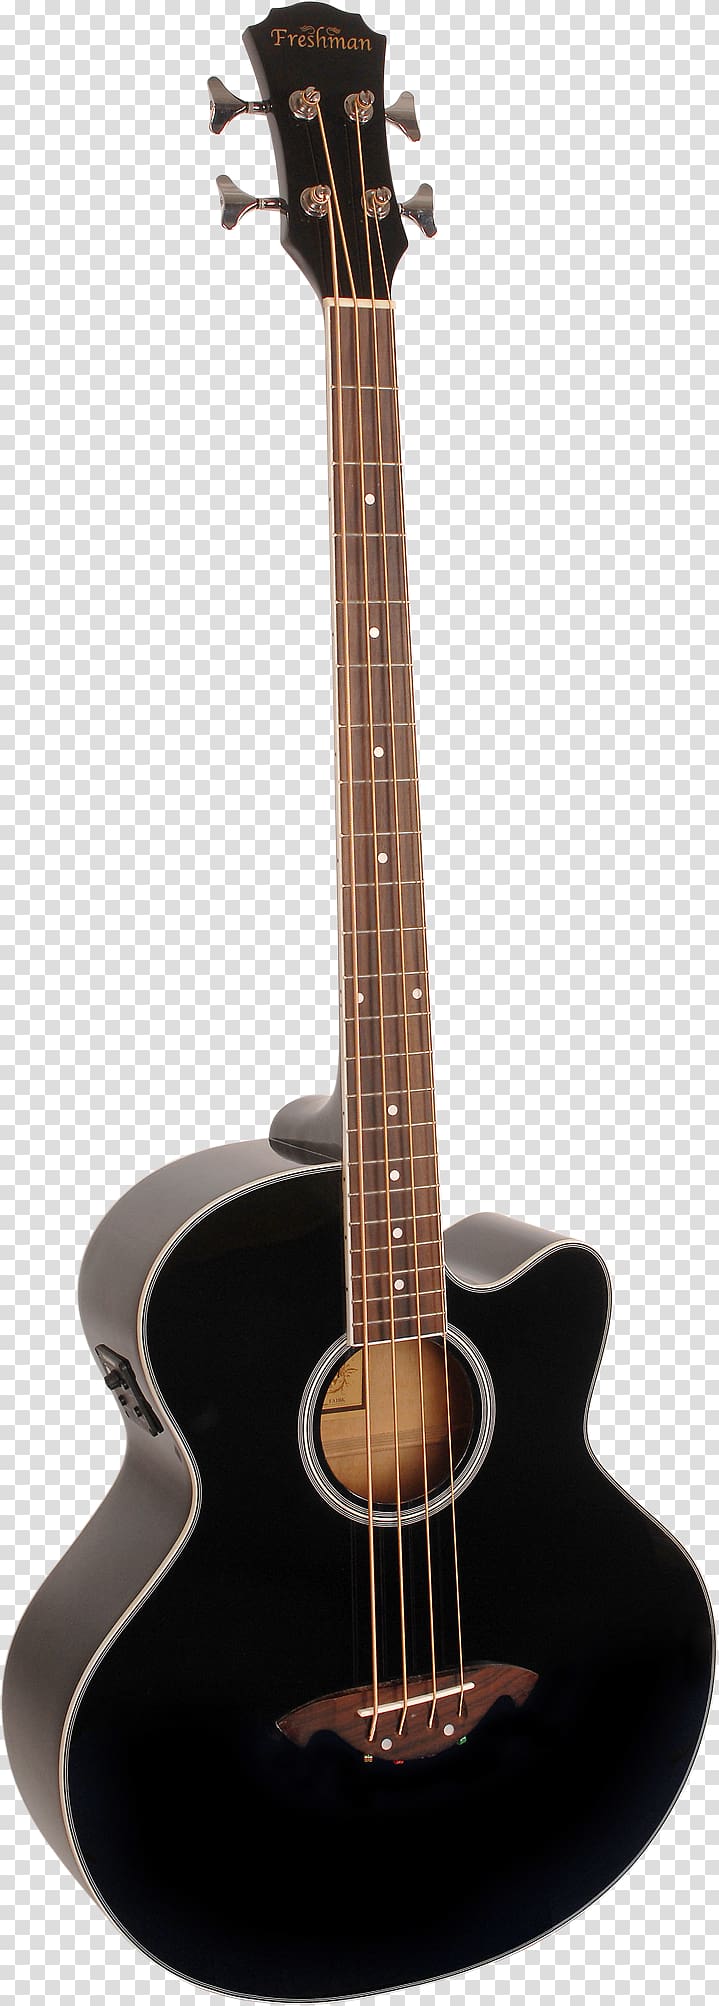 Acoustic guitar Acoustic-electric guitar Bass guitar Musical Instruments, Bass Guitar transparent background PNG clipart